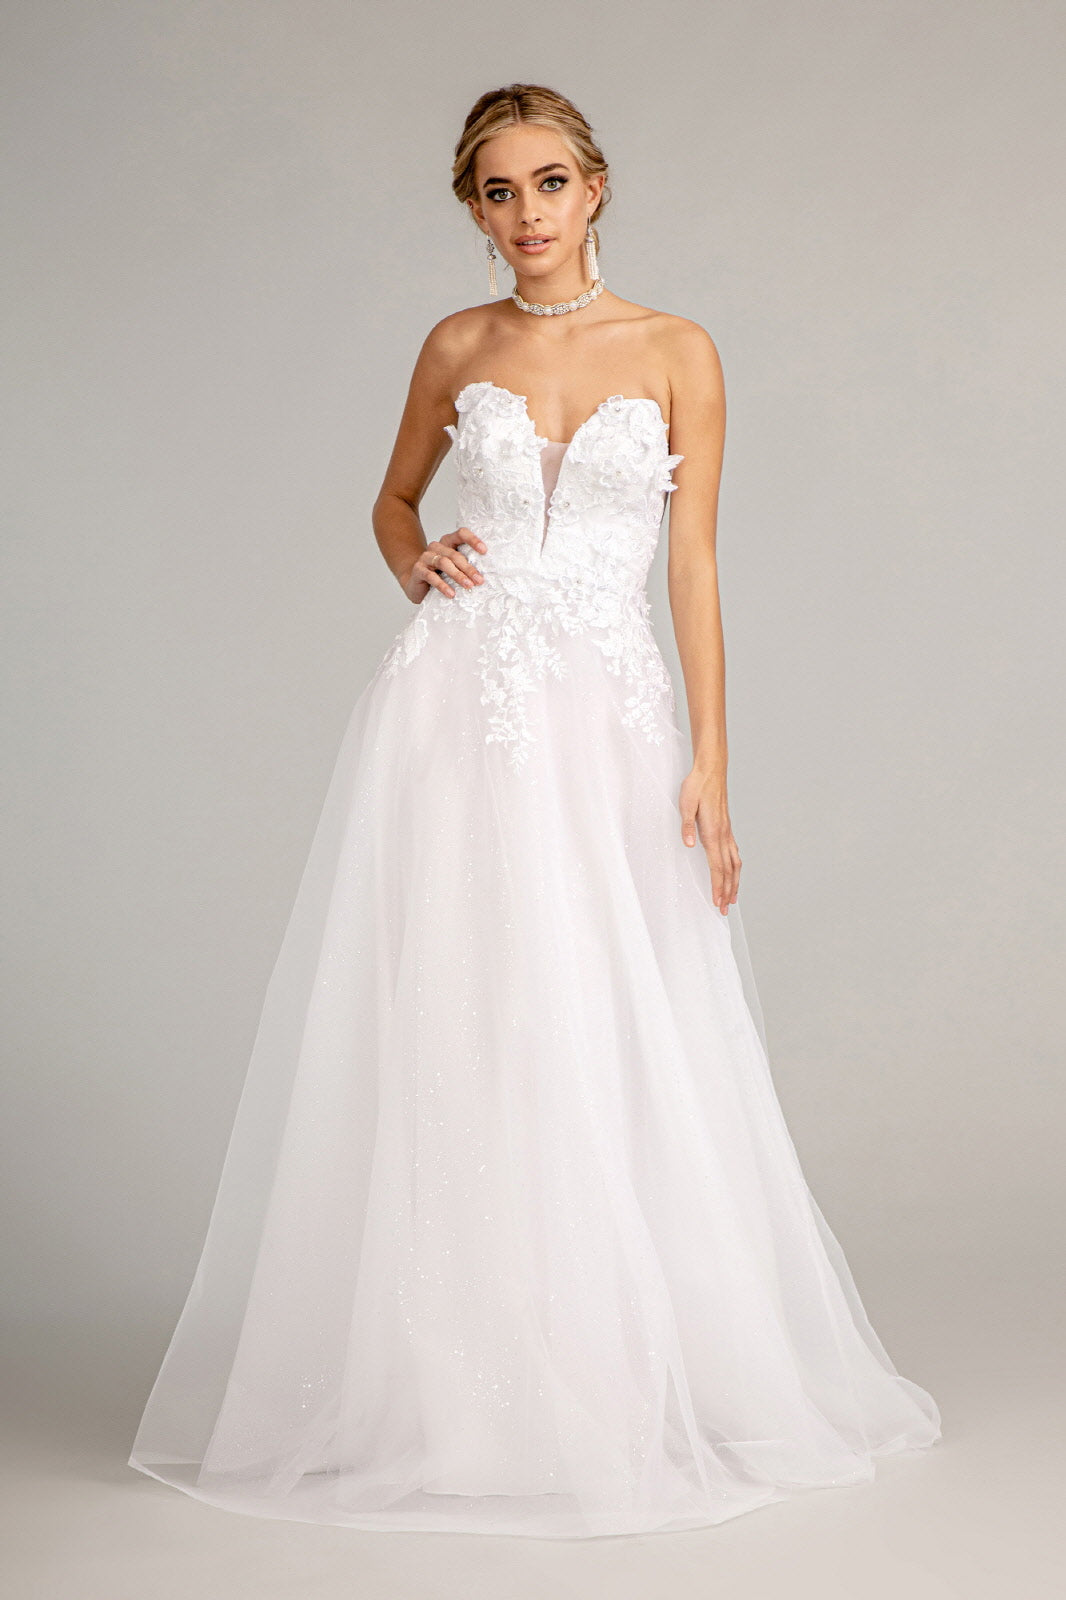 3-D Flower Embellished Mesh Wedding Gown Rhinestone and Glitter Embellished GLGL3010 Elsy Style WEDDING GOWNS